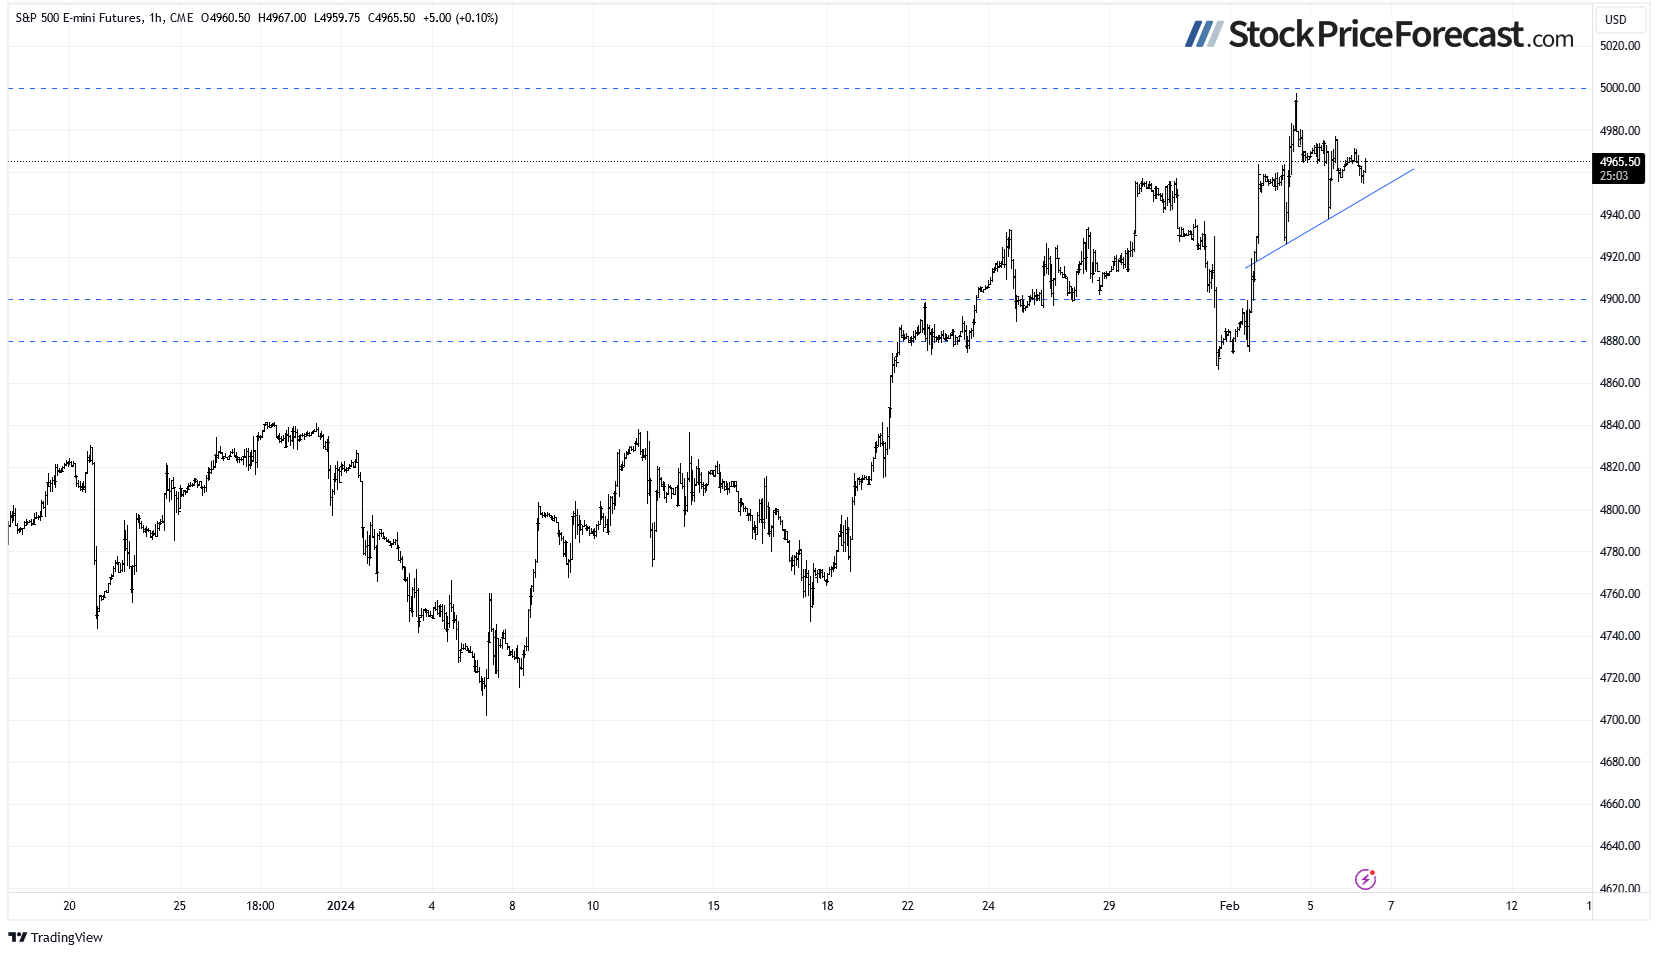 Stocks: Uncertainty Following Last Week’s Rally - Image 4